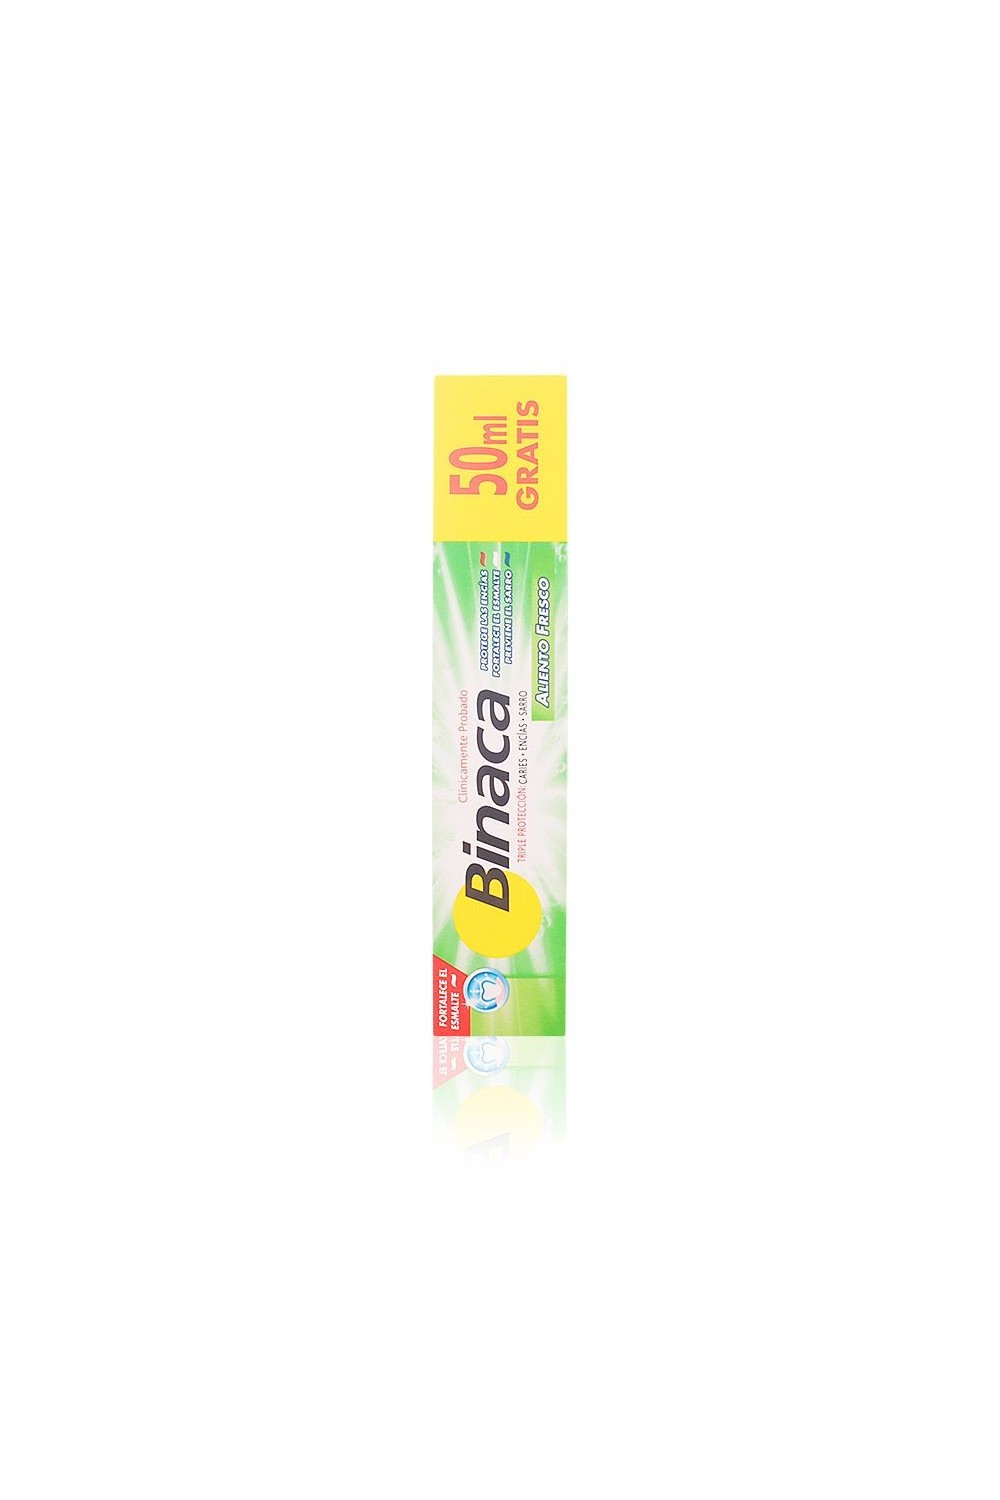 Binaca Fresh Breath Toothpaste 75ml + 50ml Free